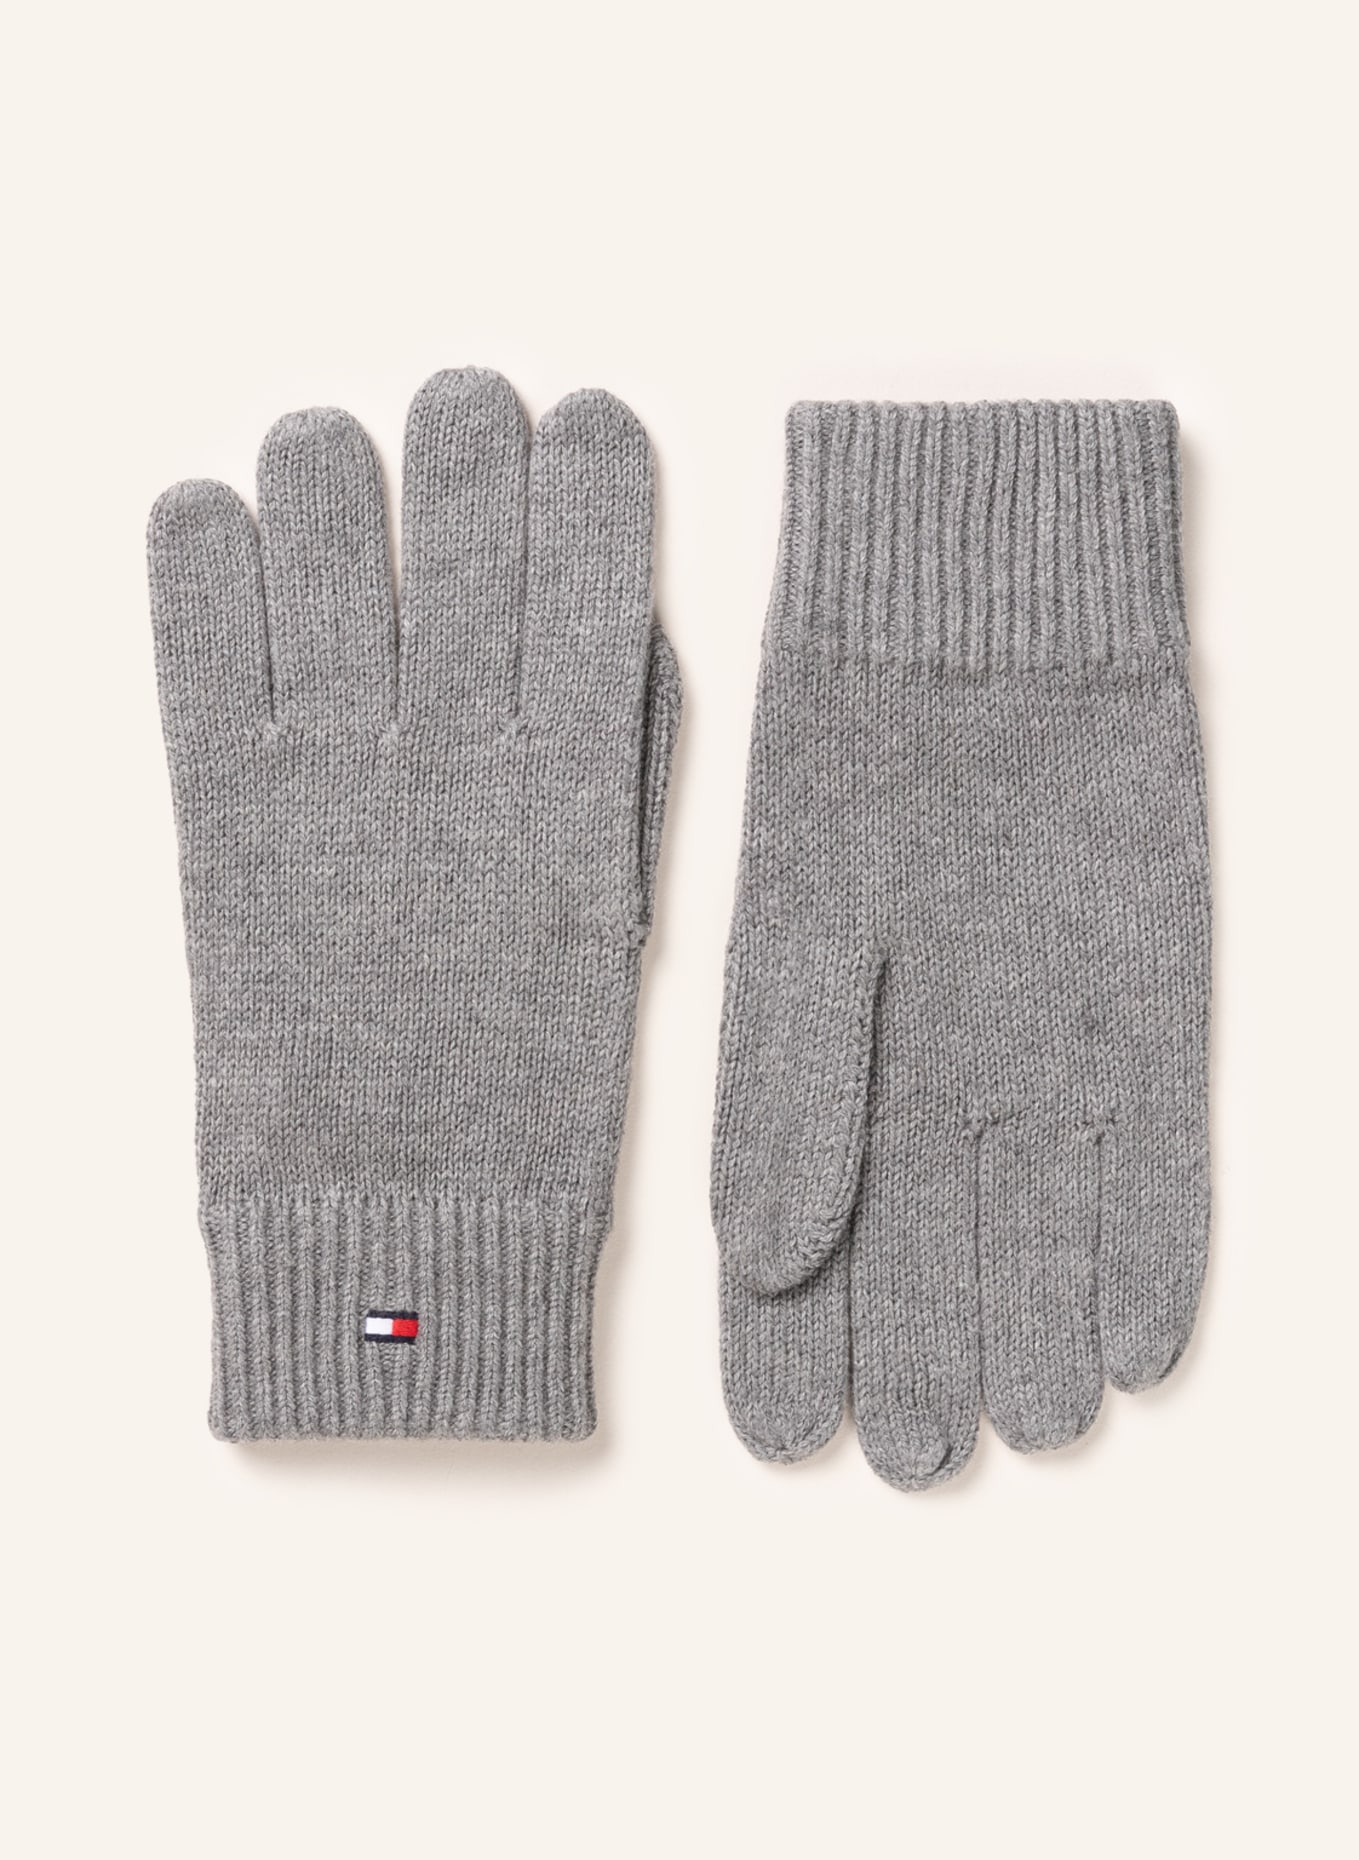 TOMMY HILFIGER Handschuhe, Farbe: GRAU (Bild 1)